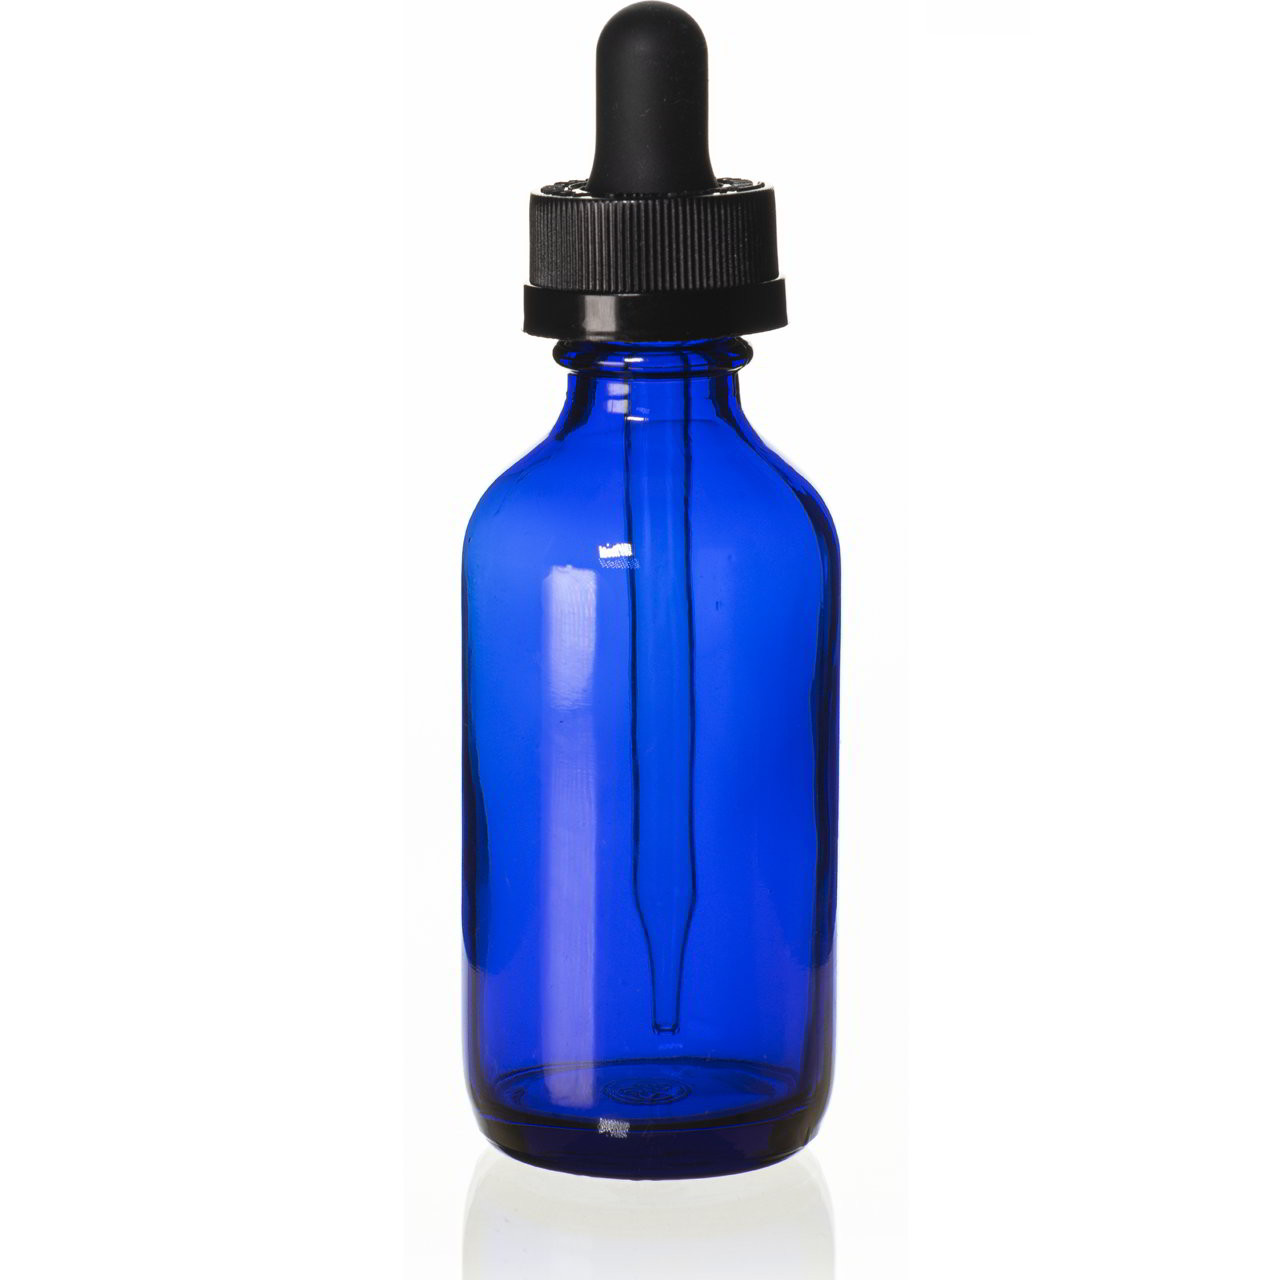 Global Cobalt Blue 2oz Black Mist Sprayer Bottle (60ml) Pack of 8 - Glass Tincture Bottles with Black Mist Sprayers for Essential Oils & More Liquids